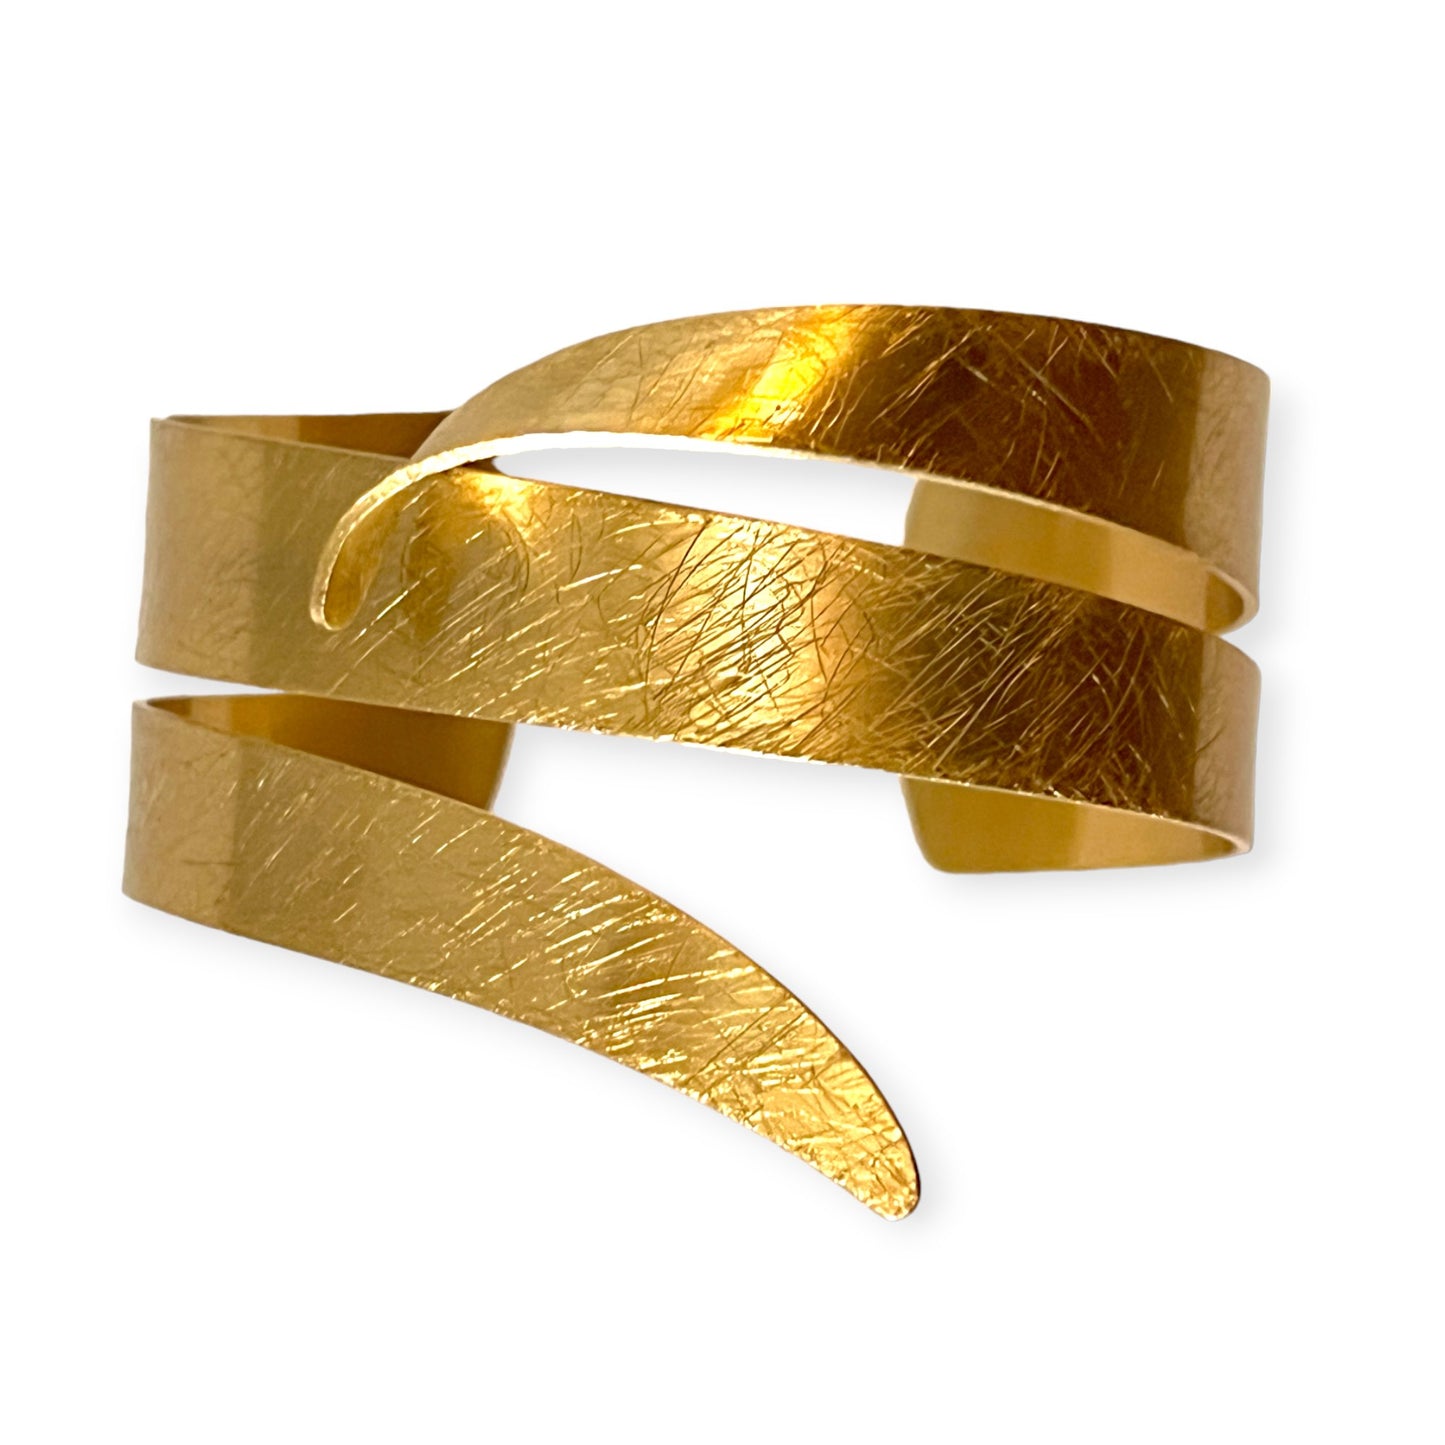 Organic swirl metal cuff bracelet - Sundara Joon